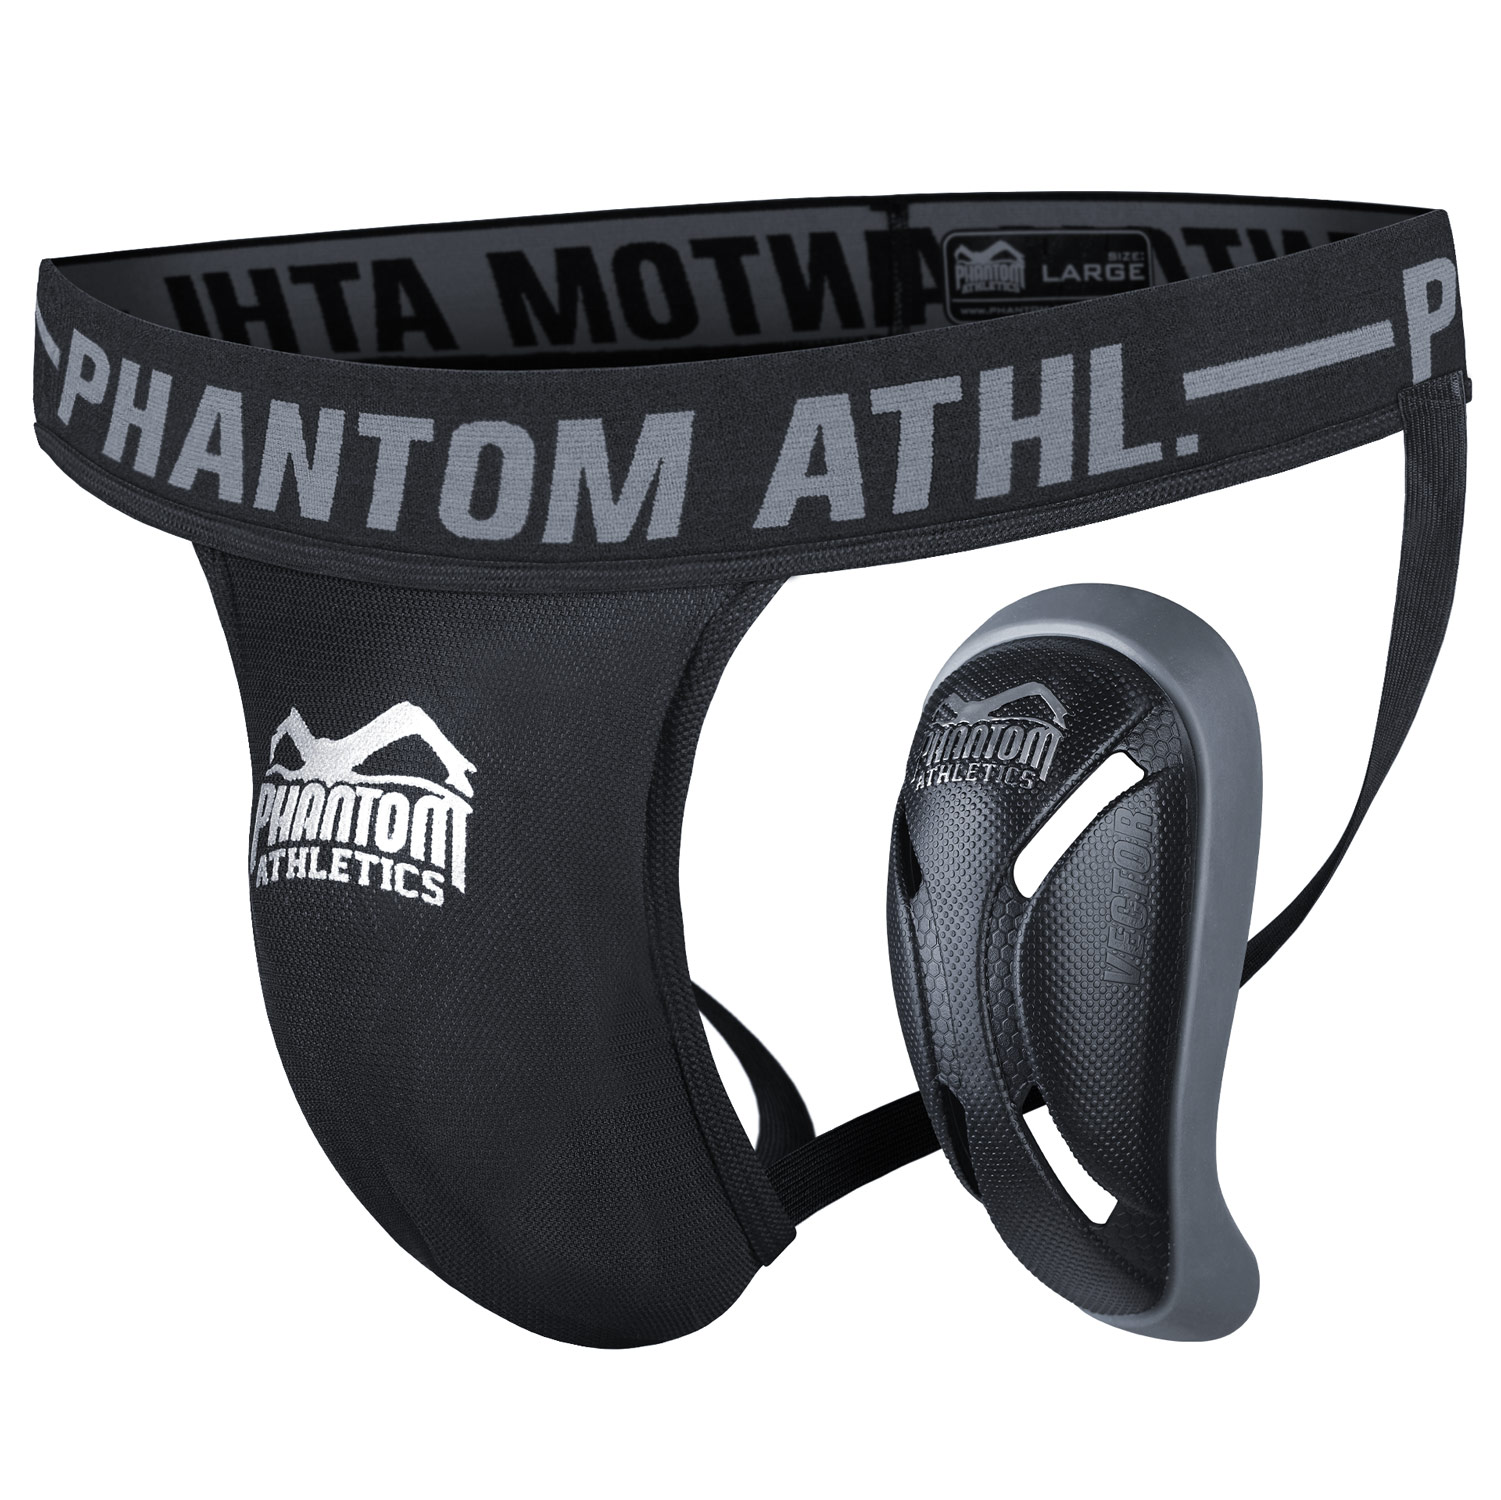 Phantom Athletics Tiefschutz mit Cup, Vector